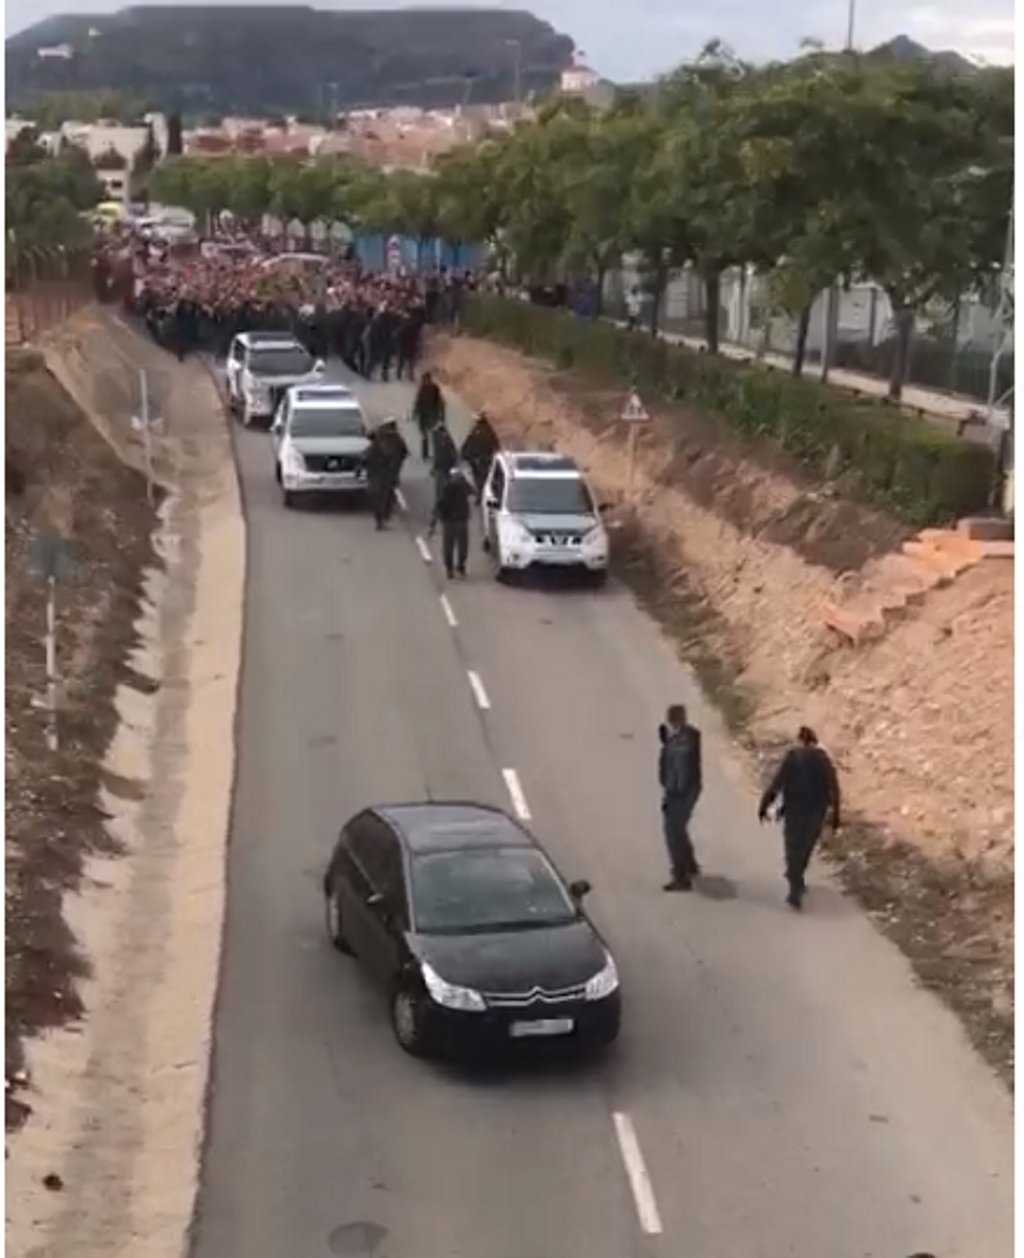 Los vecinos de Mont-roig del Camp expulsan a la Guardia Civil del municipio